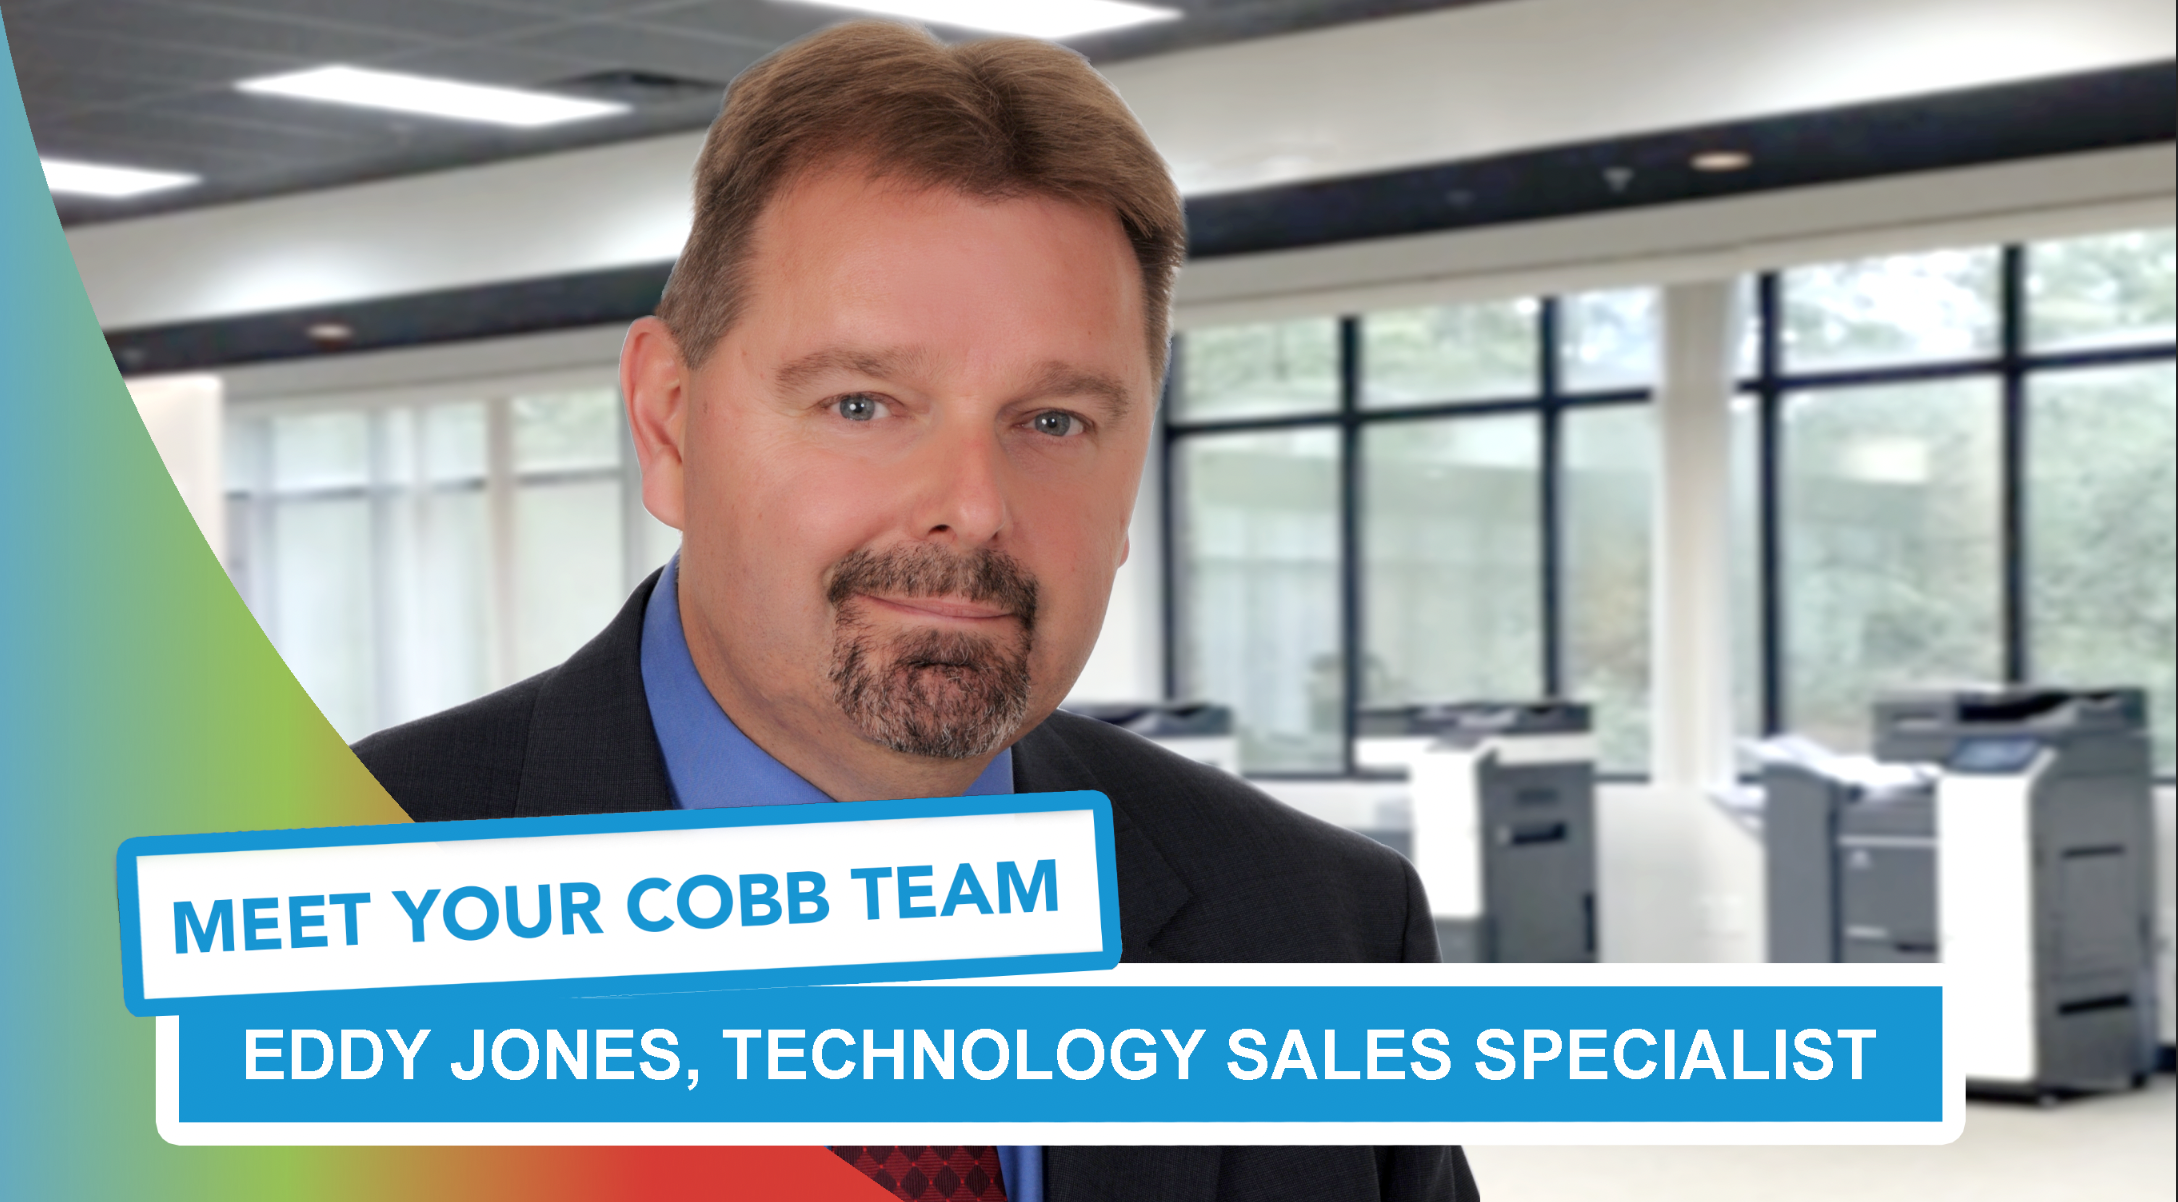 Meet Your Cobb Team: Eddy Jones, Technology Sales Specialist